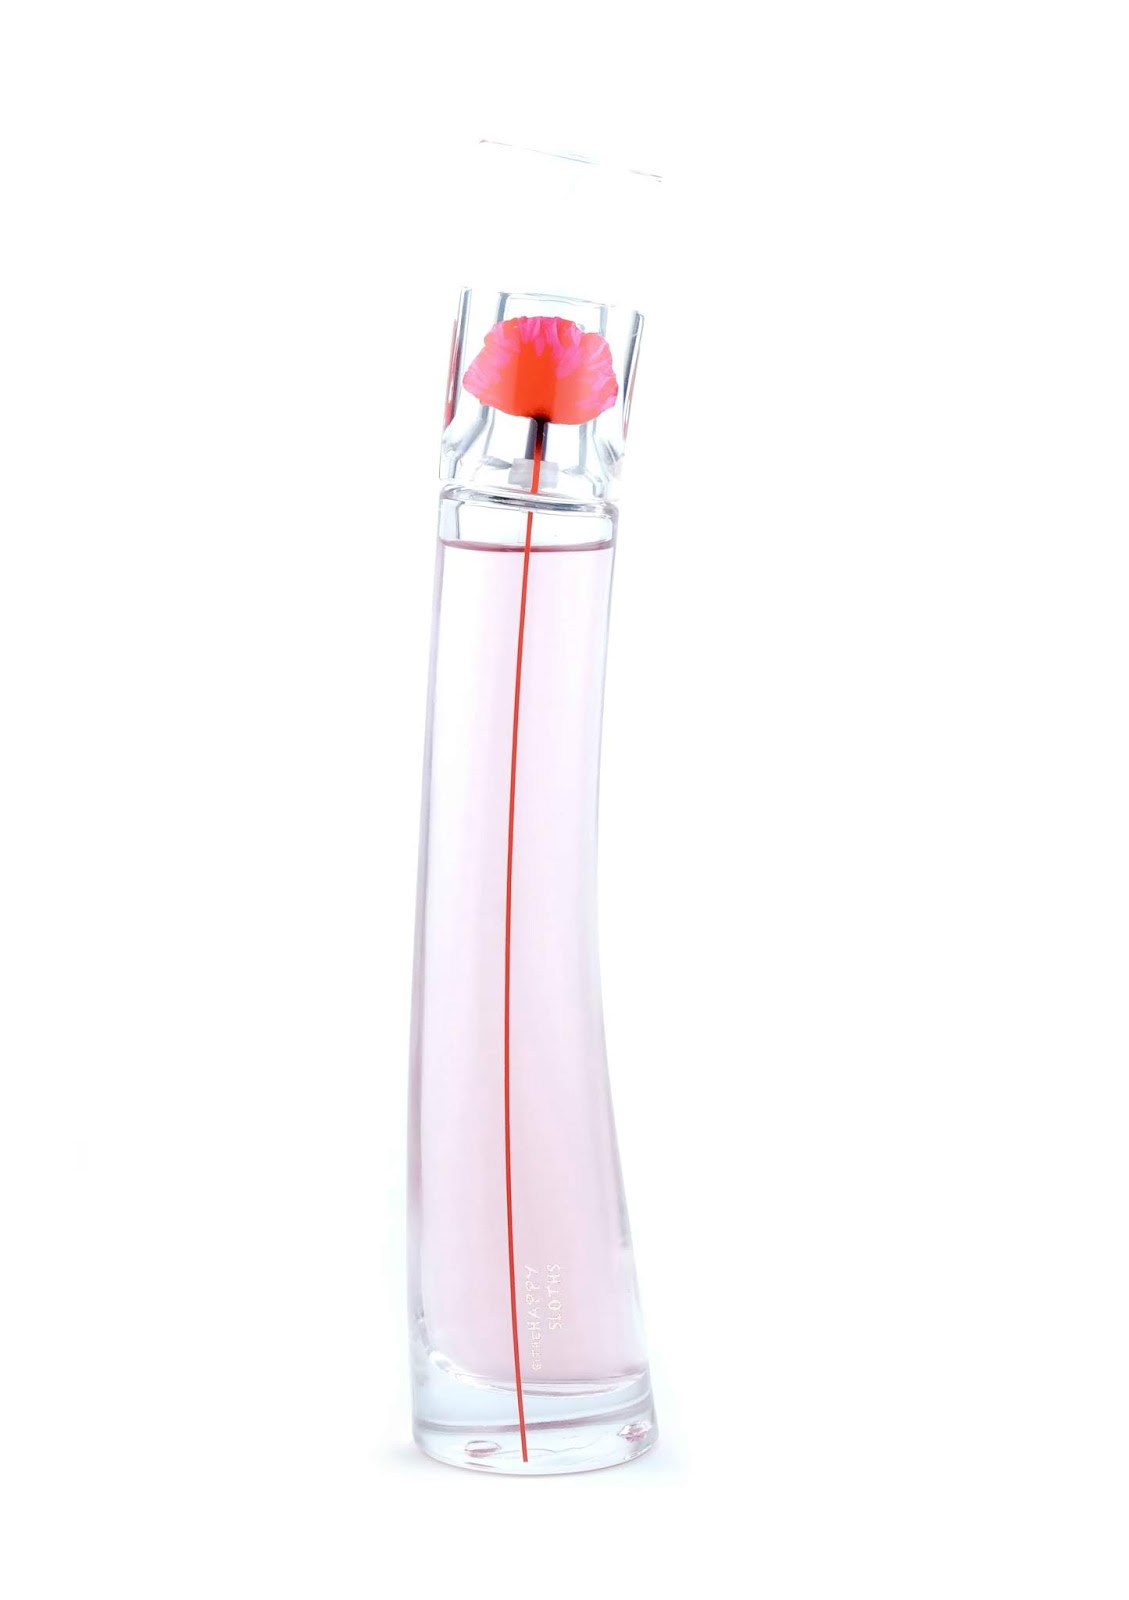 parfum kenzo flower original